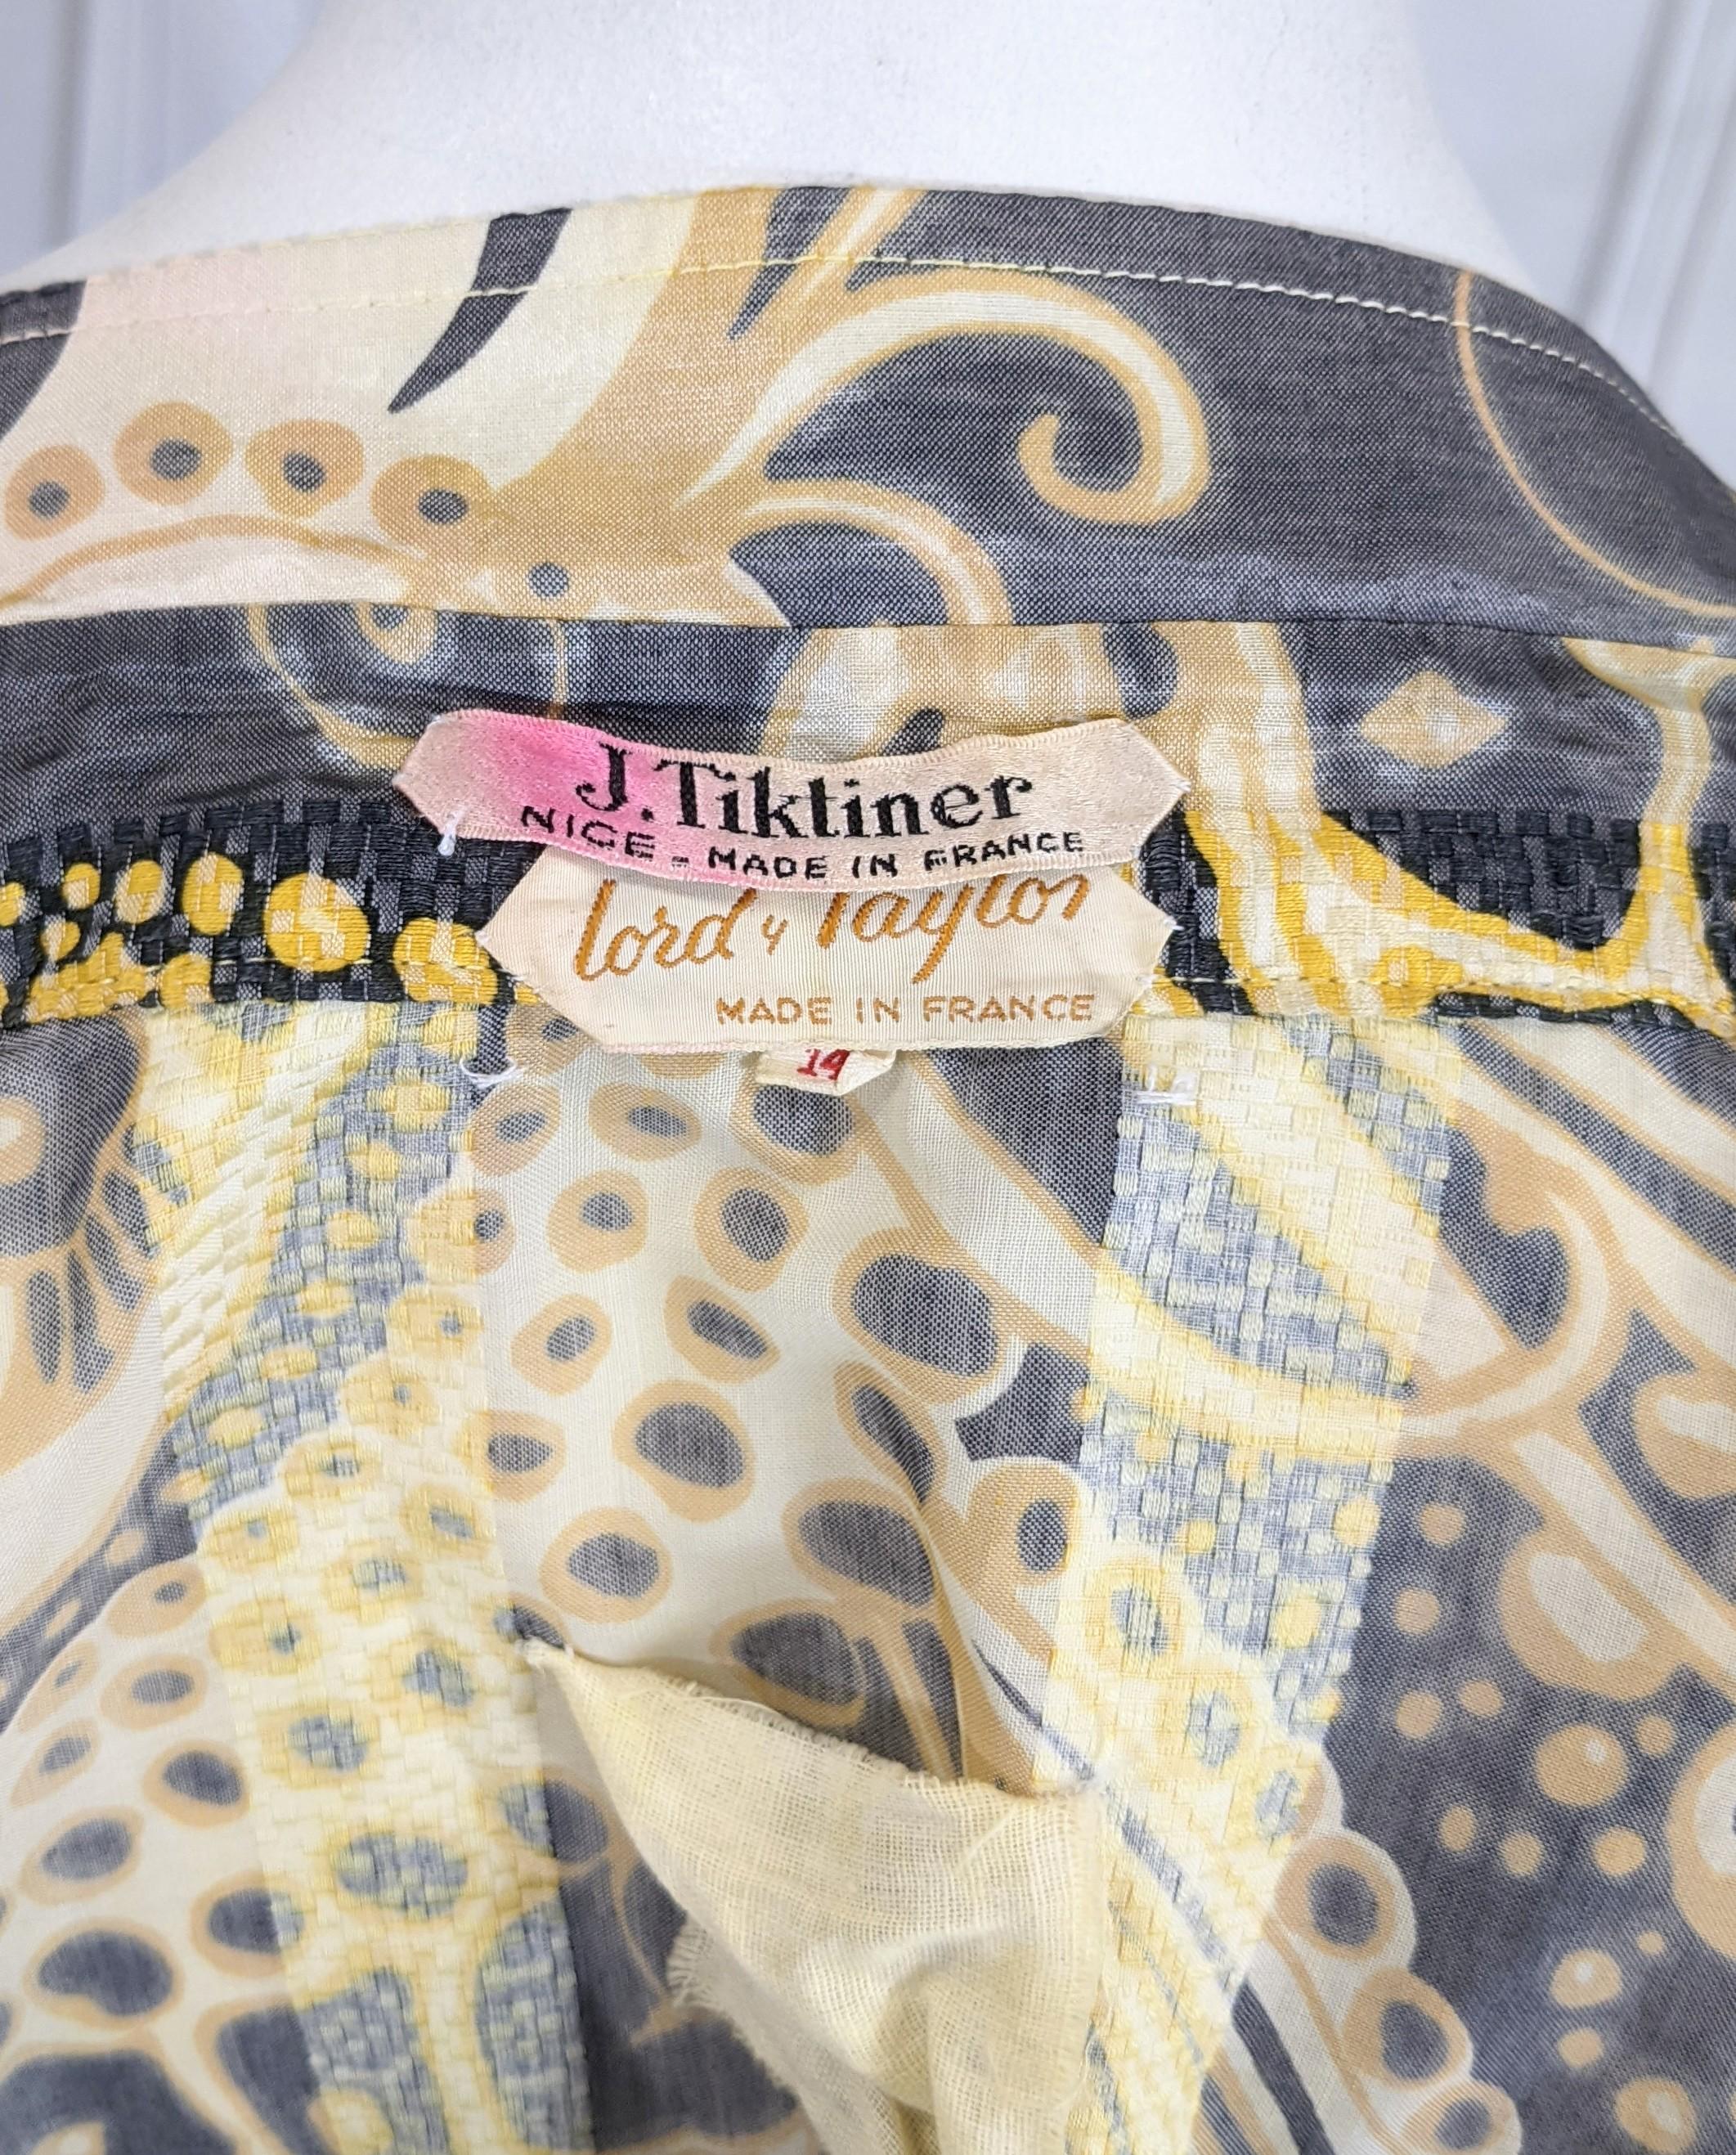 J. Tiktiner Silk Print Shirtwaist For Sale 1